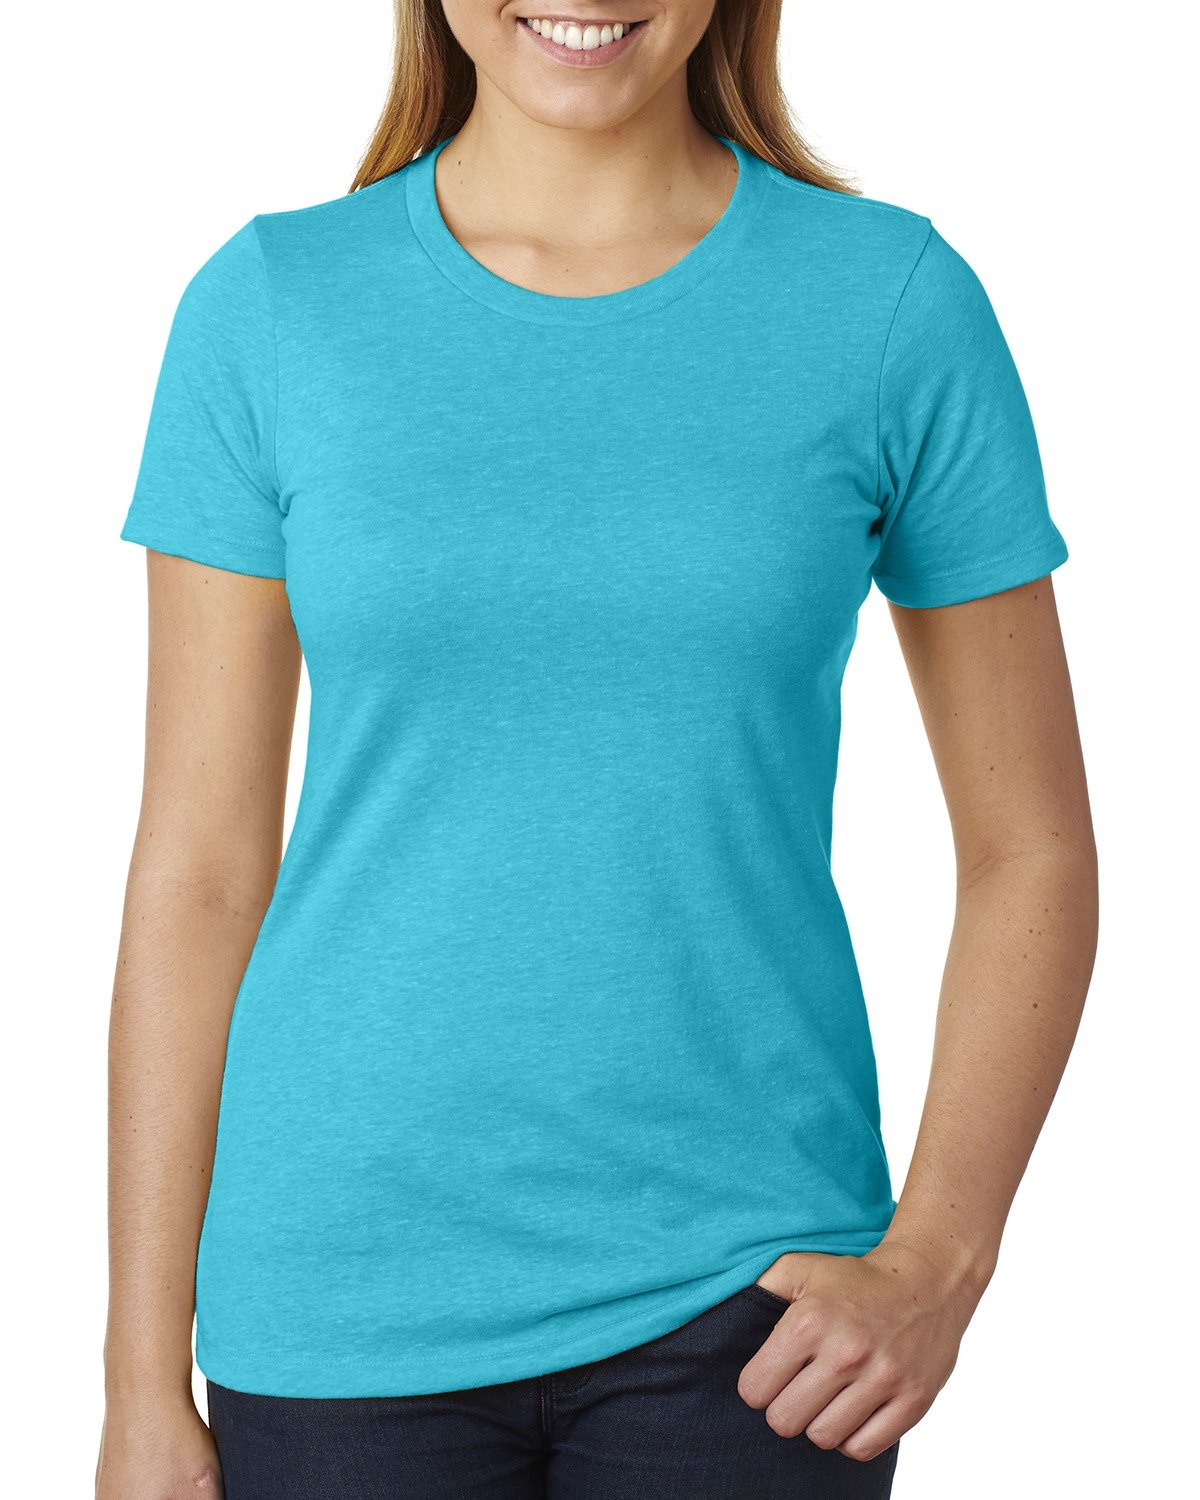 Next Level Ladies' CVC T-Shirt BONDI BLUE 